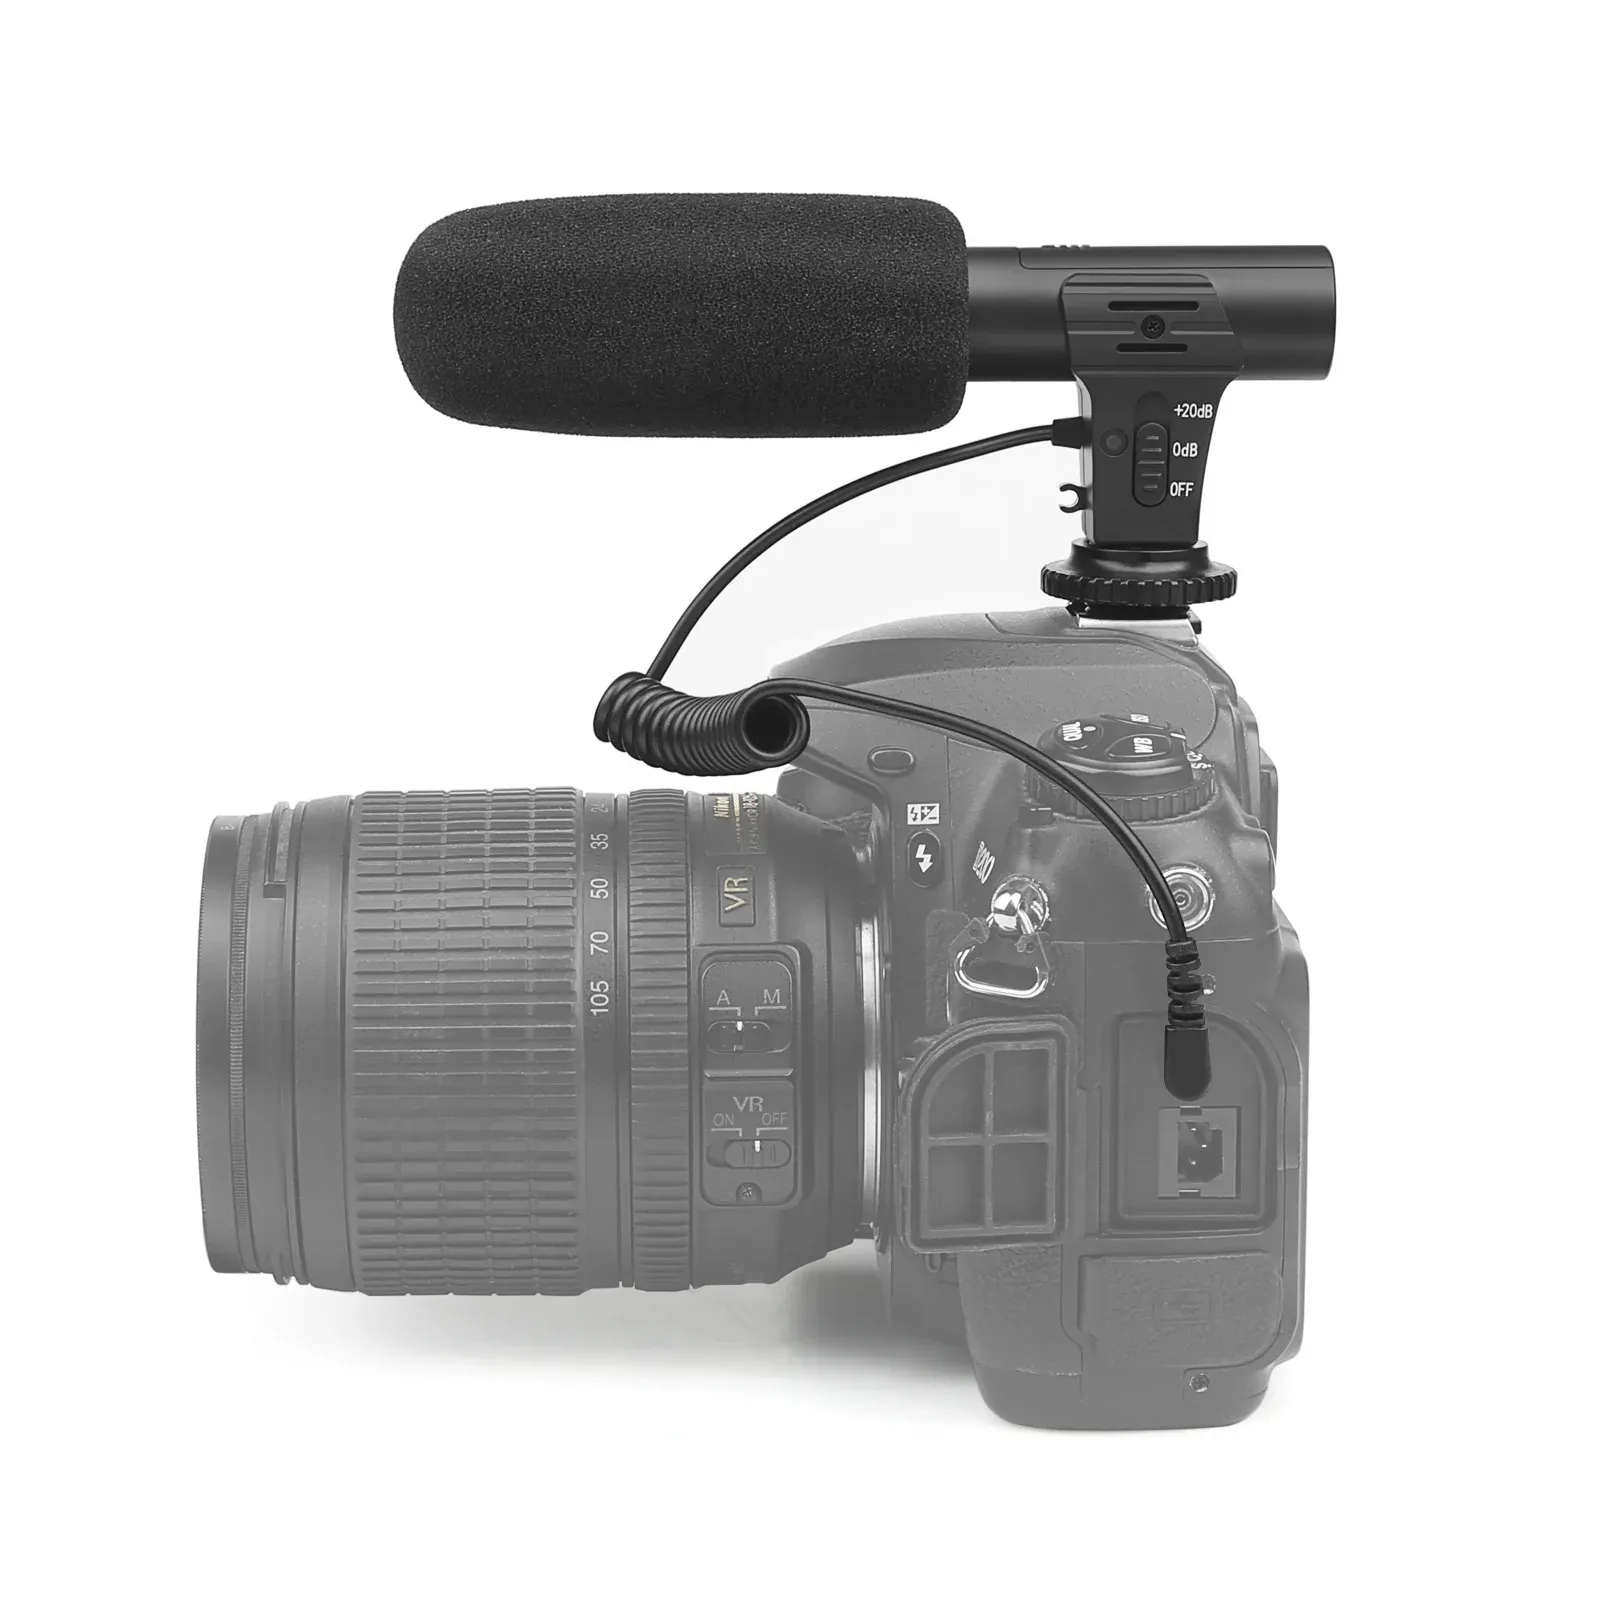 Microphones Stéréo microphone MIC05 Microphone SLR Camera DV Stéréo microphone adapté à la caméra Interview News Recording Microphone